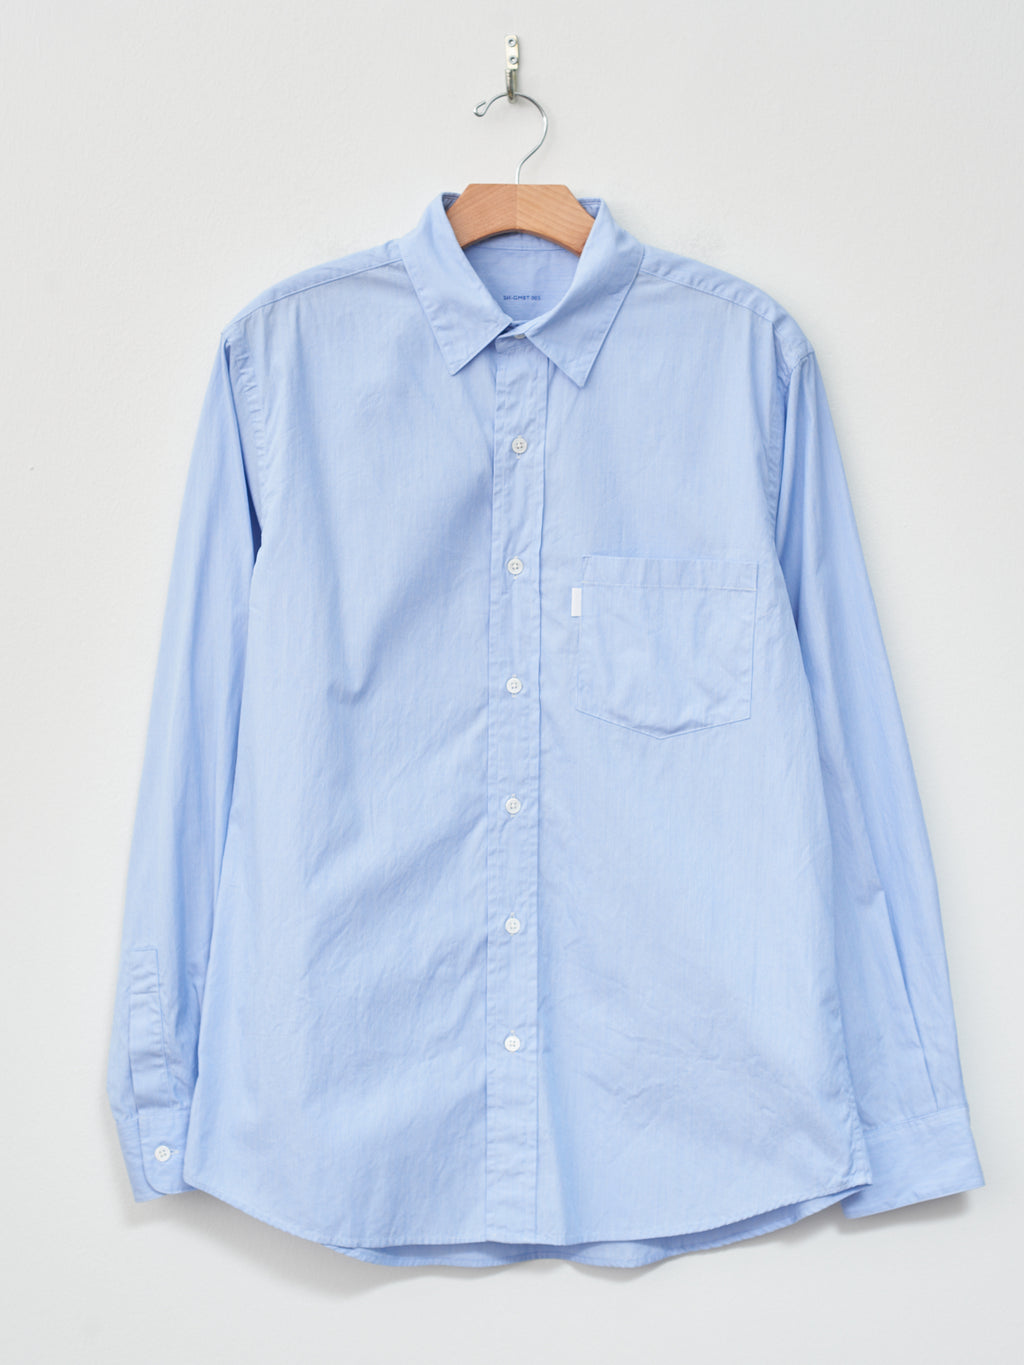 Namu Shop - SH Shirt Regular Collar Shirt - Light Blue Stripe